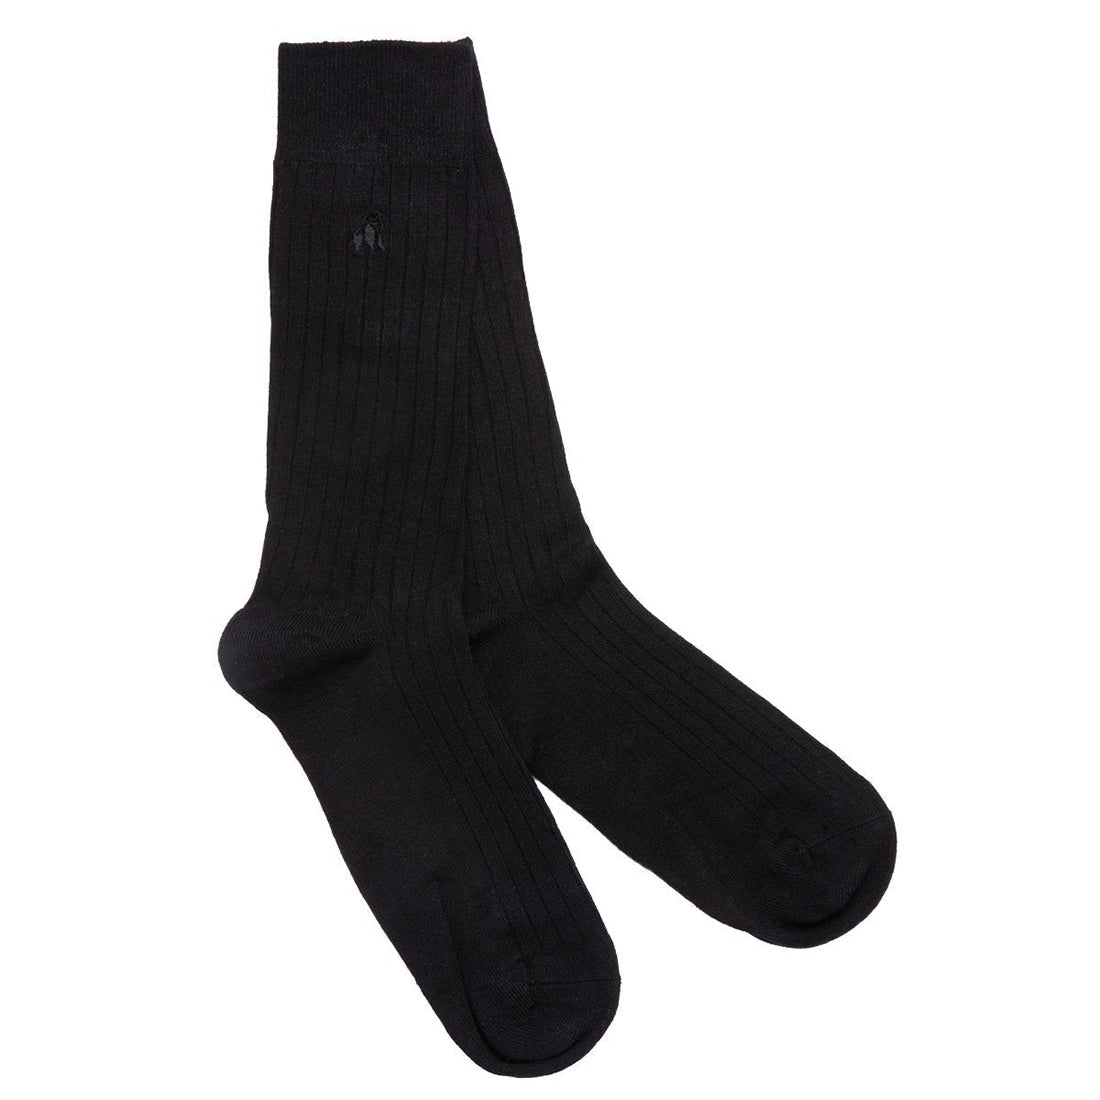 socks-jet-black-bamboo-socks-comfort-cuff-1_c202b766-c8ee-4cbc-b45e-2c2a533b0e80.jpg